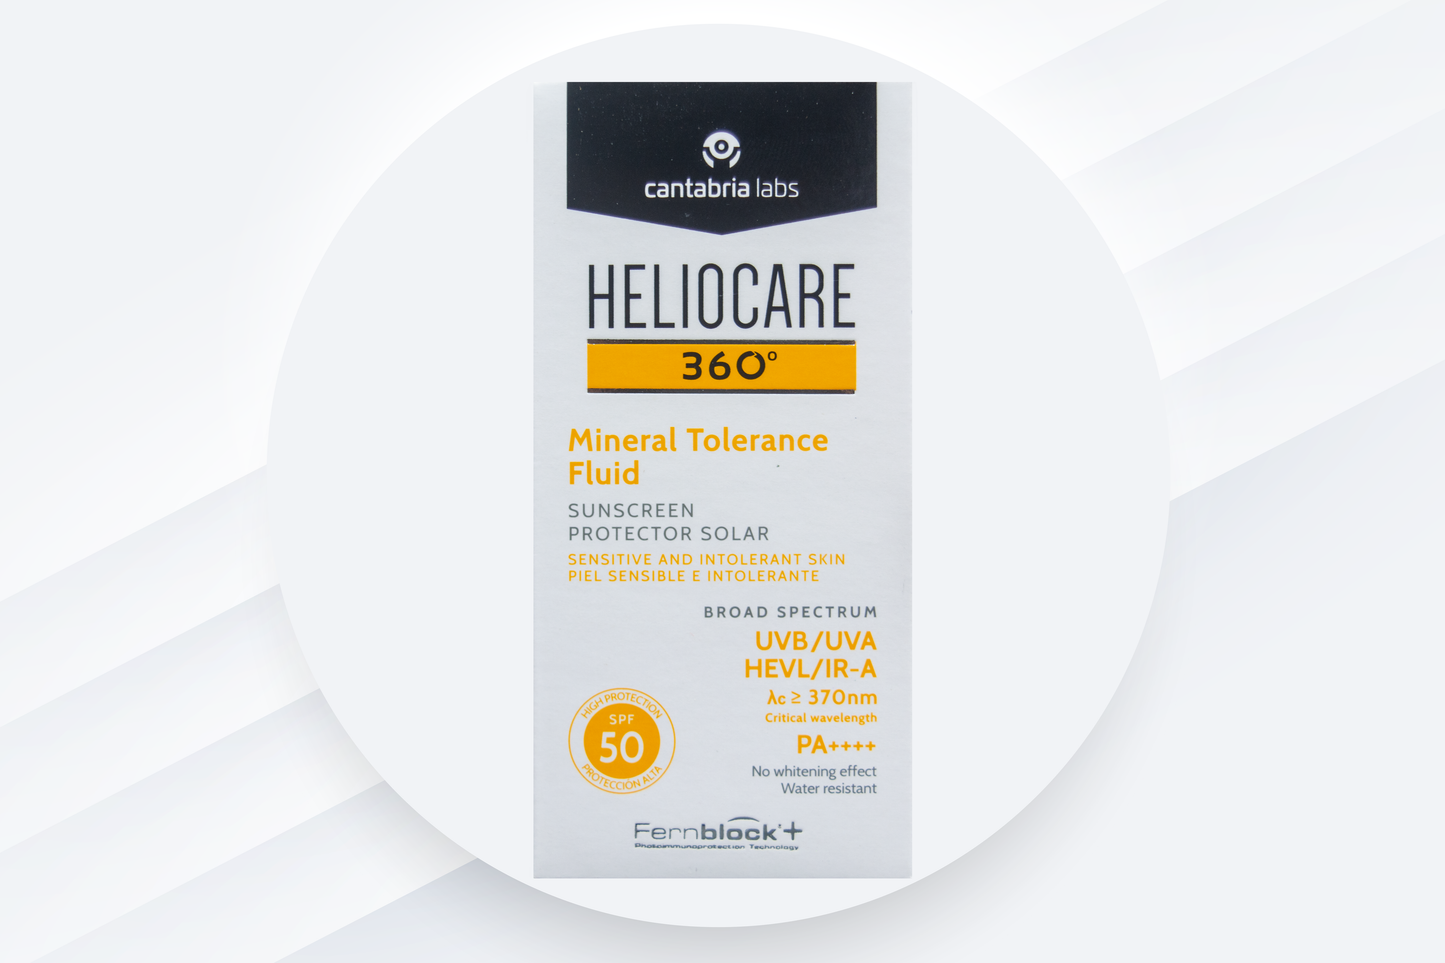 HELIOCARE 360º Mineral Tolerance Fluid SPF 50+, 50ml